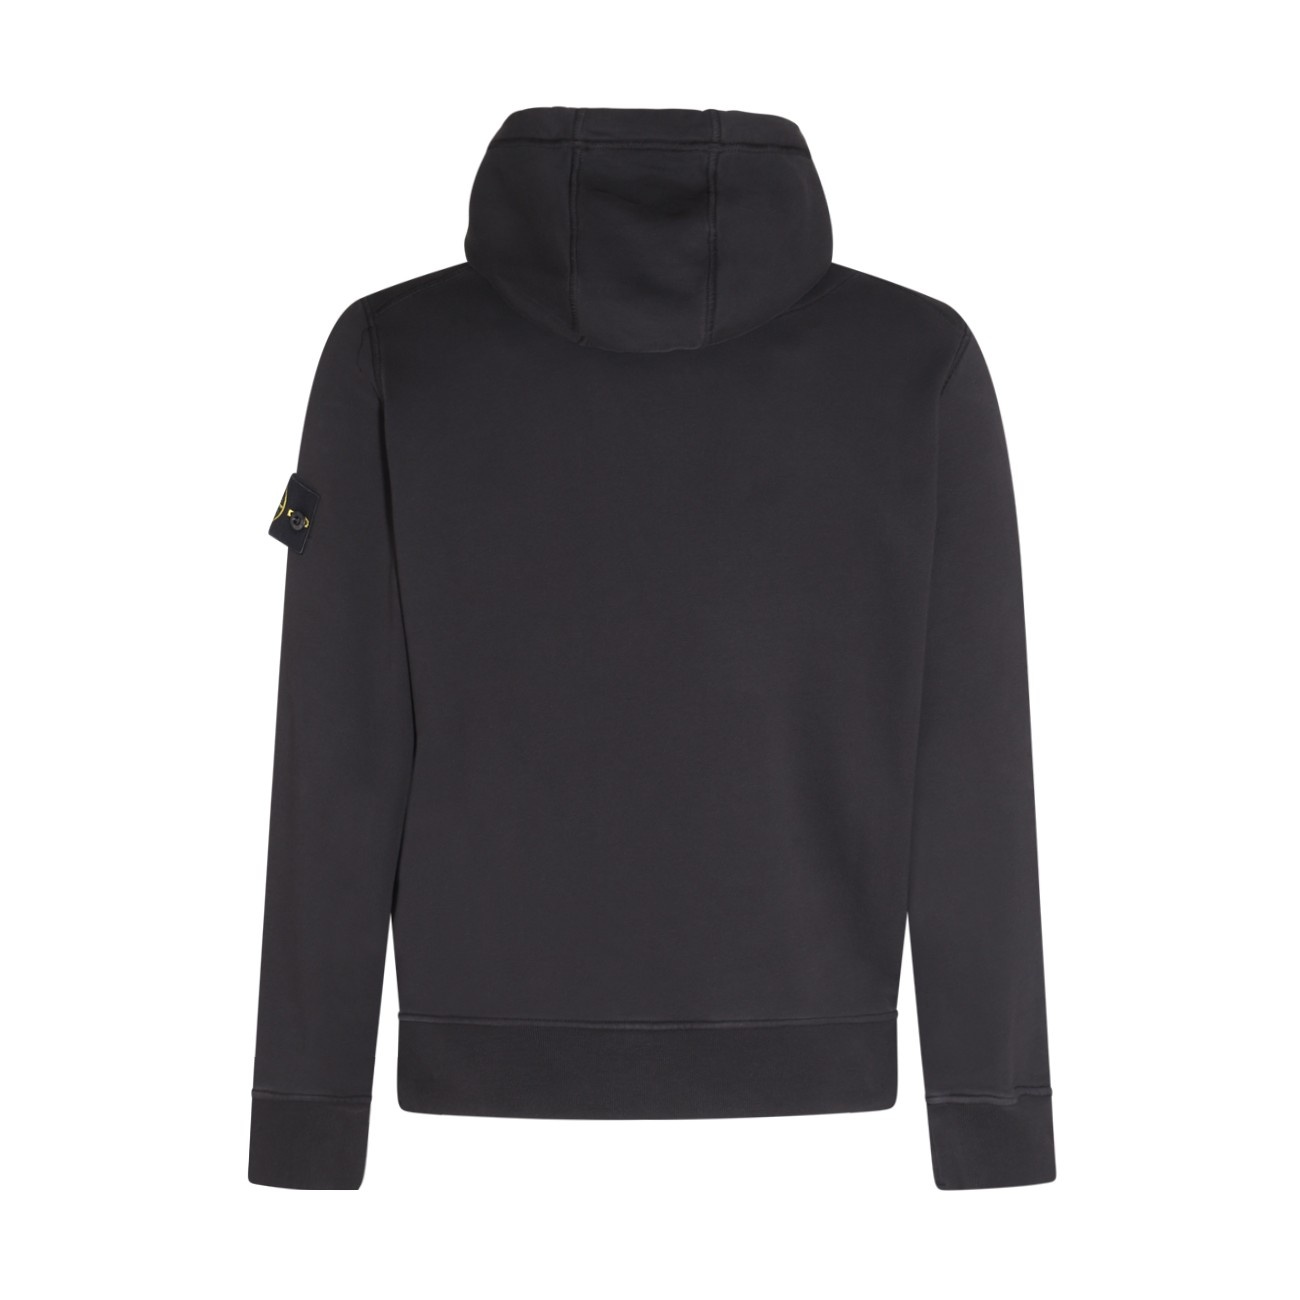 black cotton sweatshirt - 2